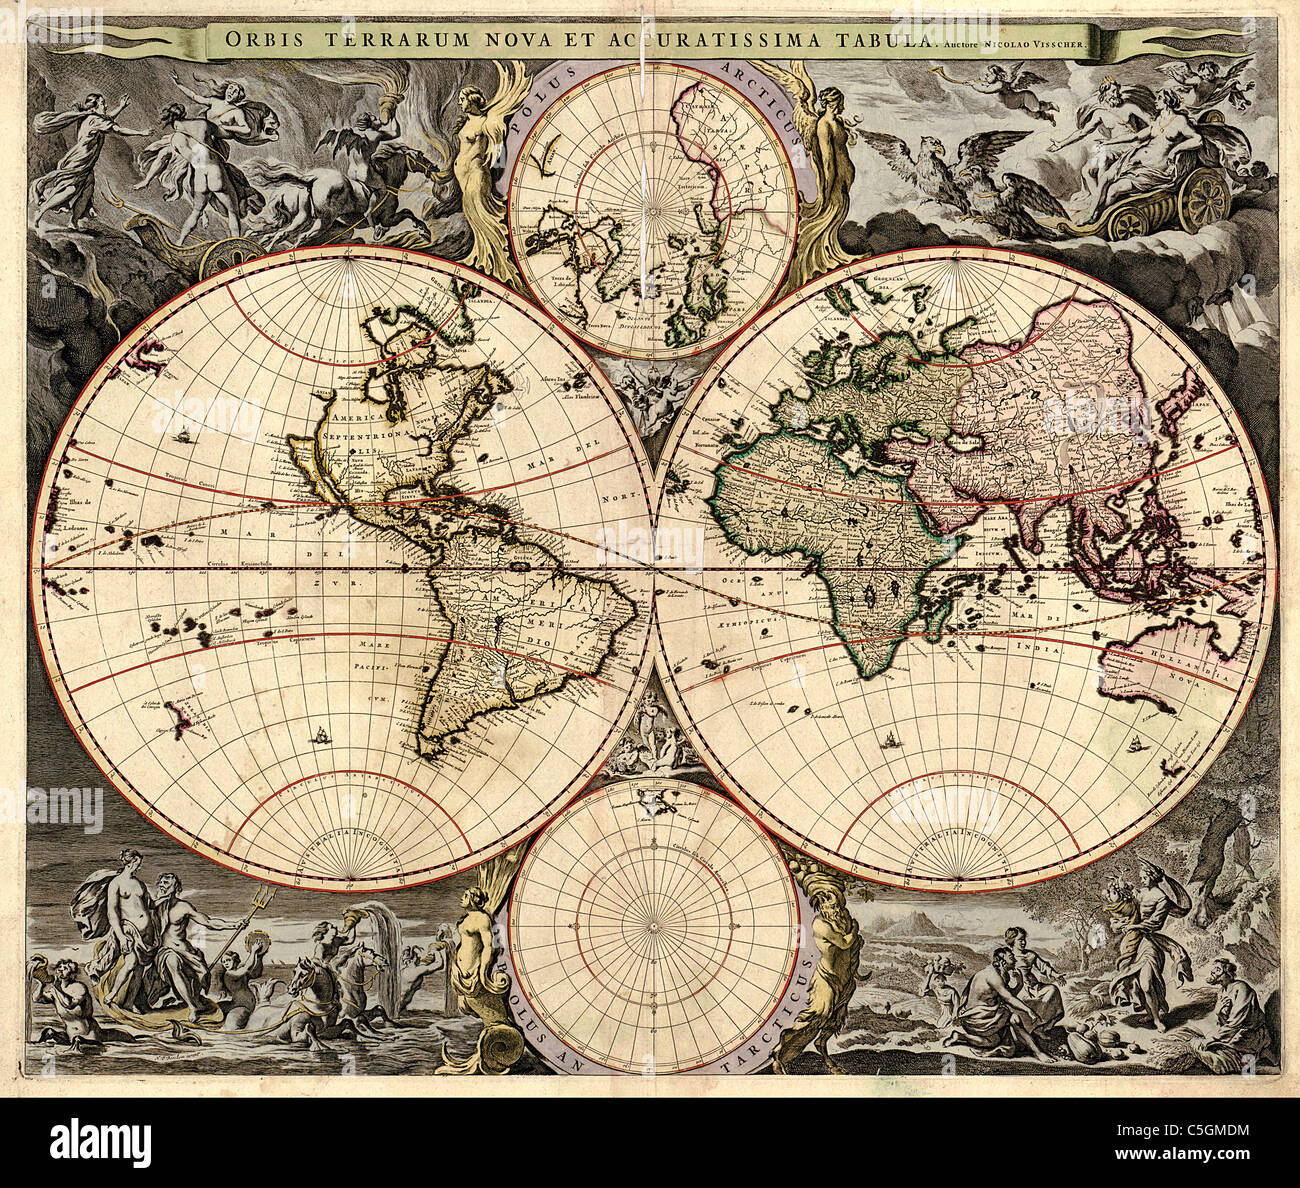 Orbis Terrarum Nova et Accuratissima Tabula - Antique World Map by Nicolao Visscher circa 1690 Stock Photo